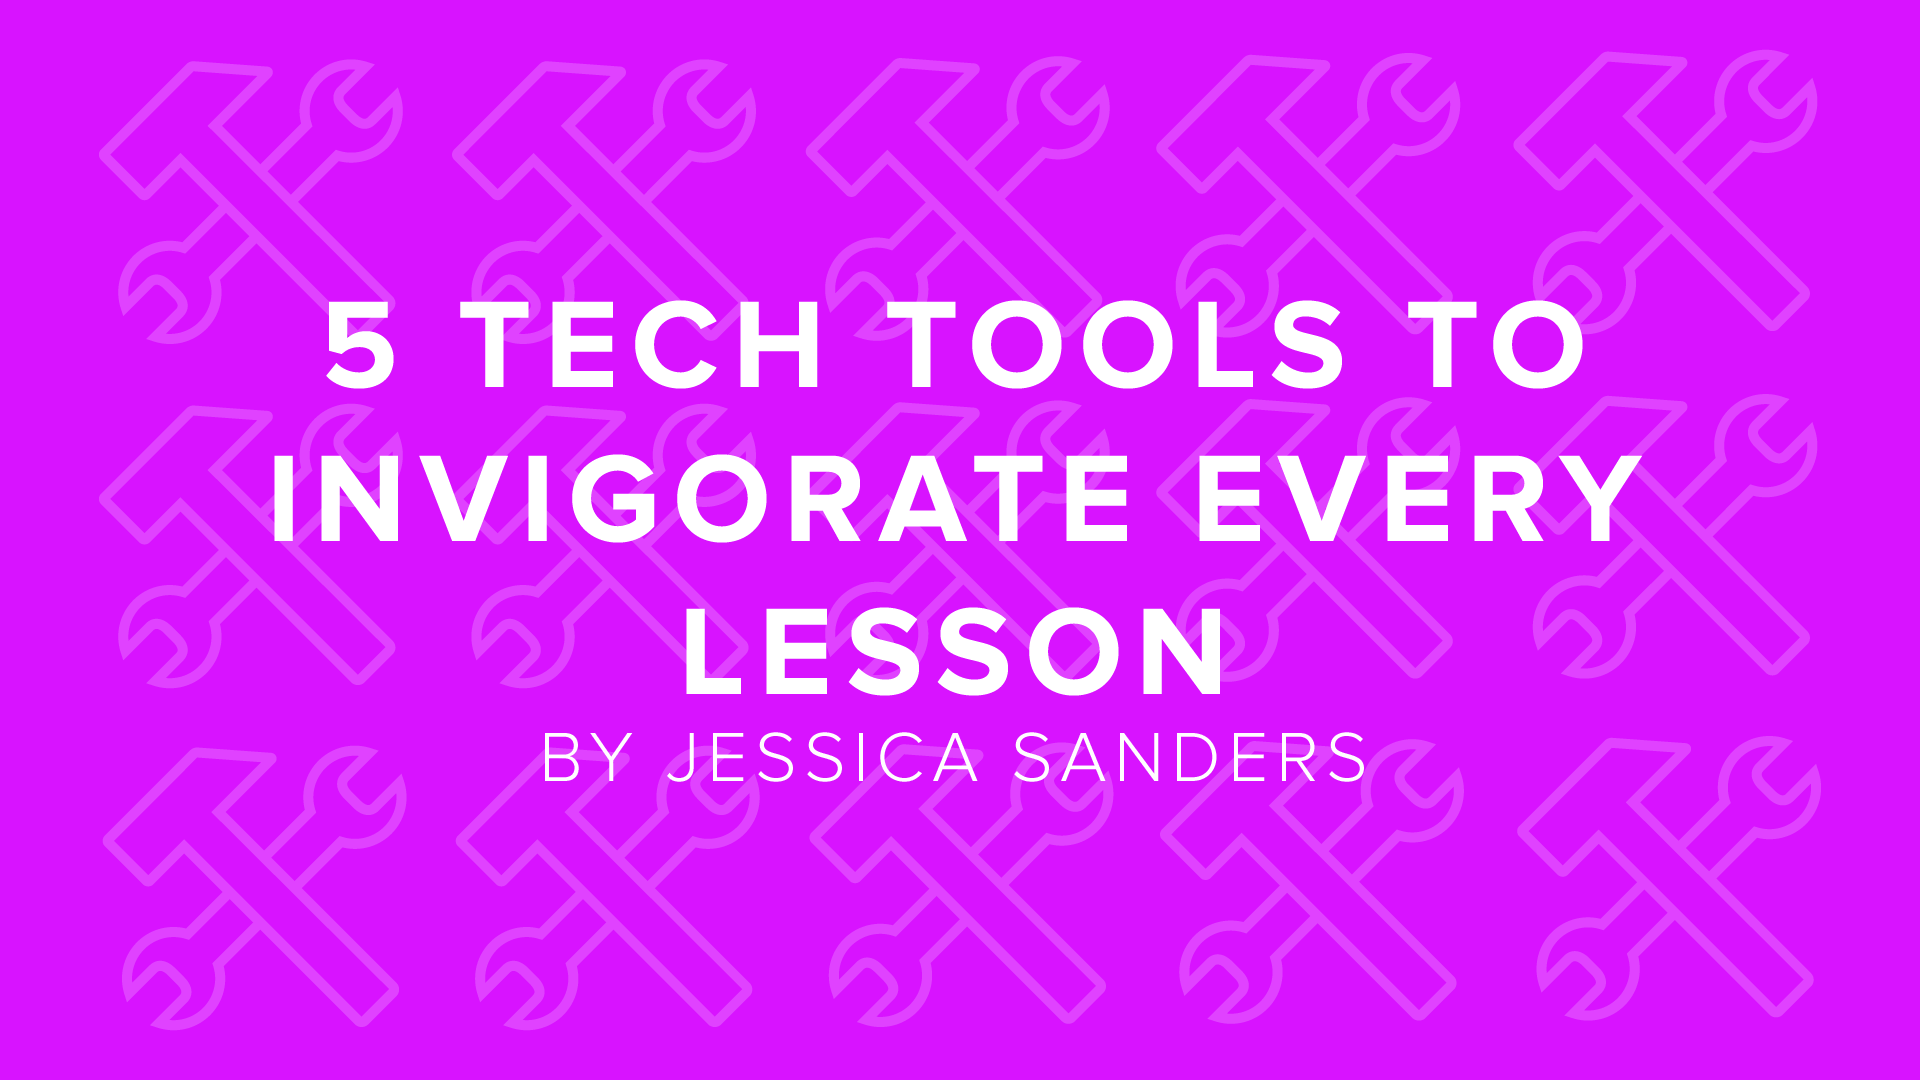 DigitalChalk: 5 Tech Tools to Invigorate Every Lesson by Jessica Sanders